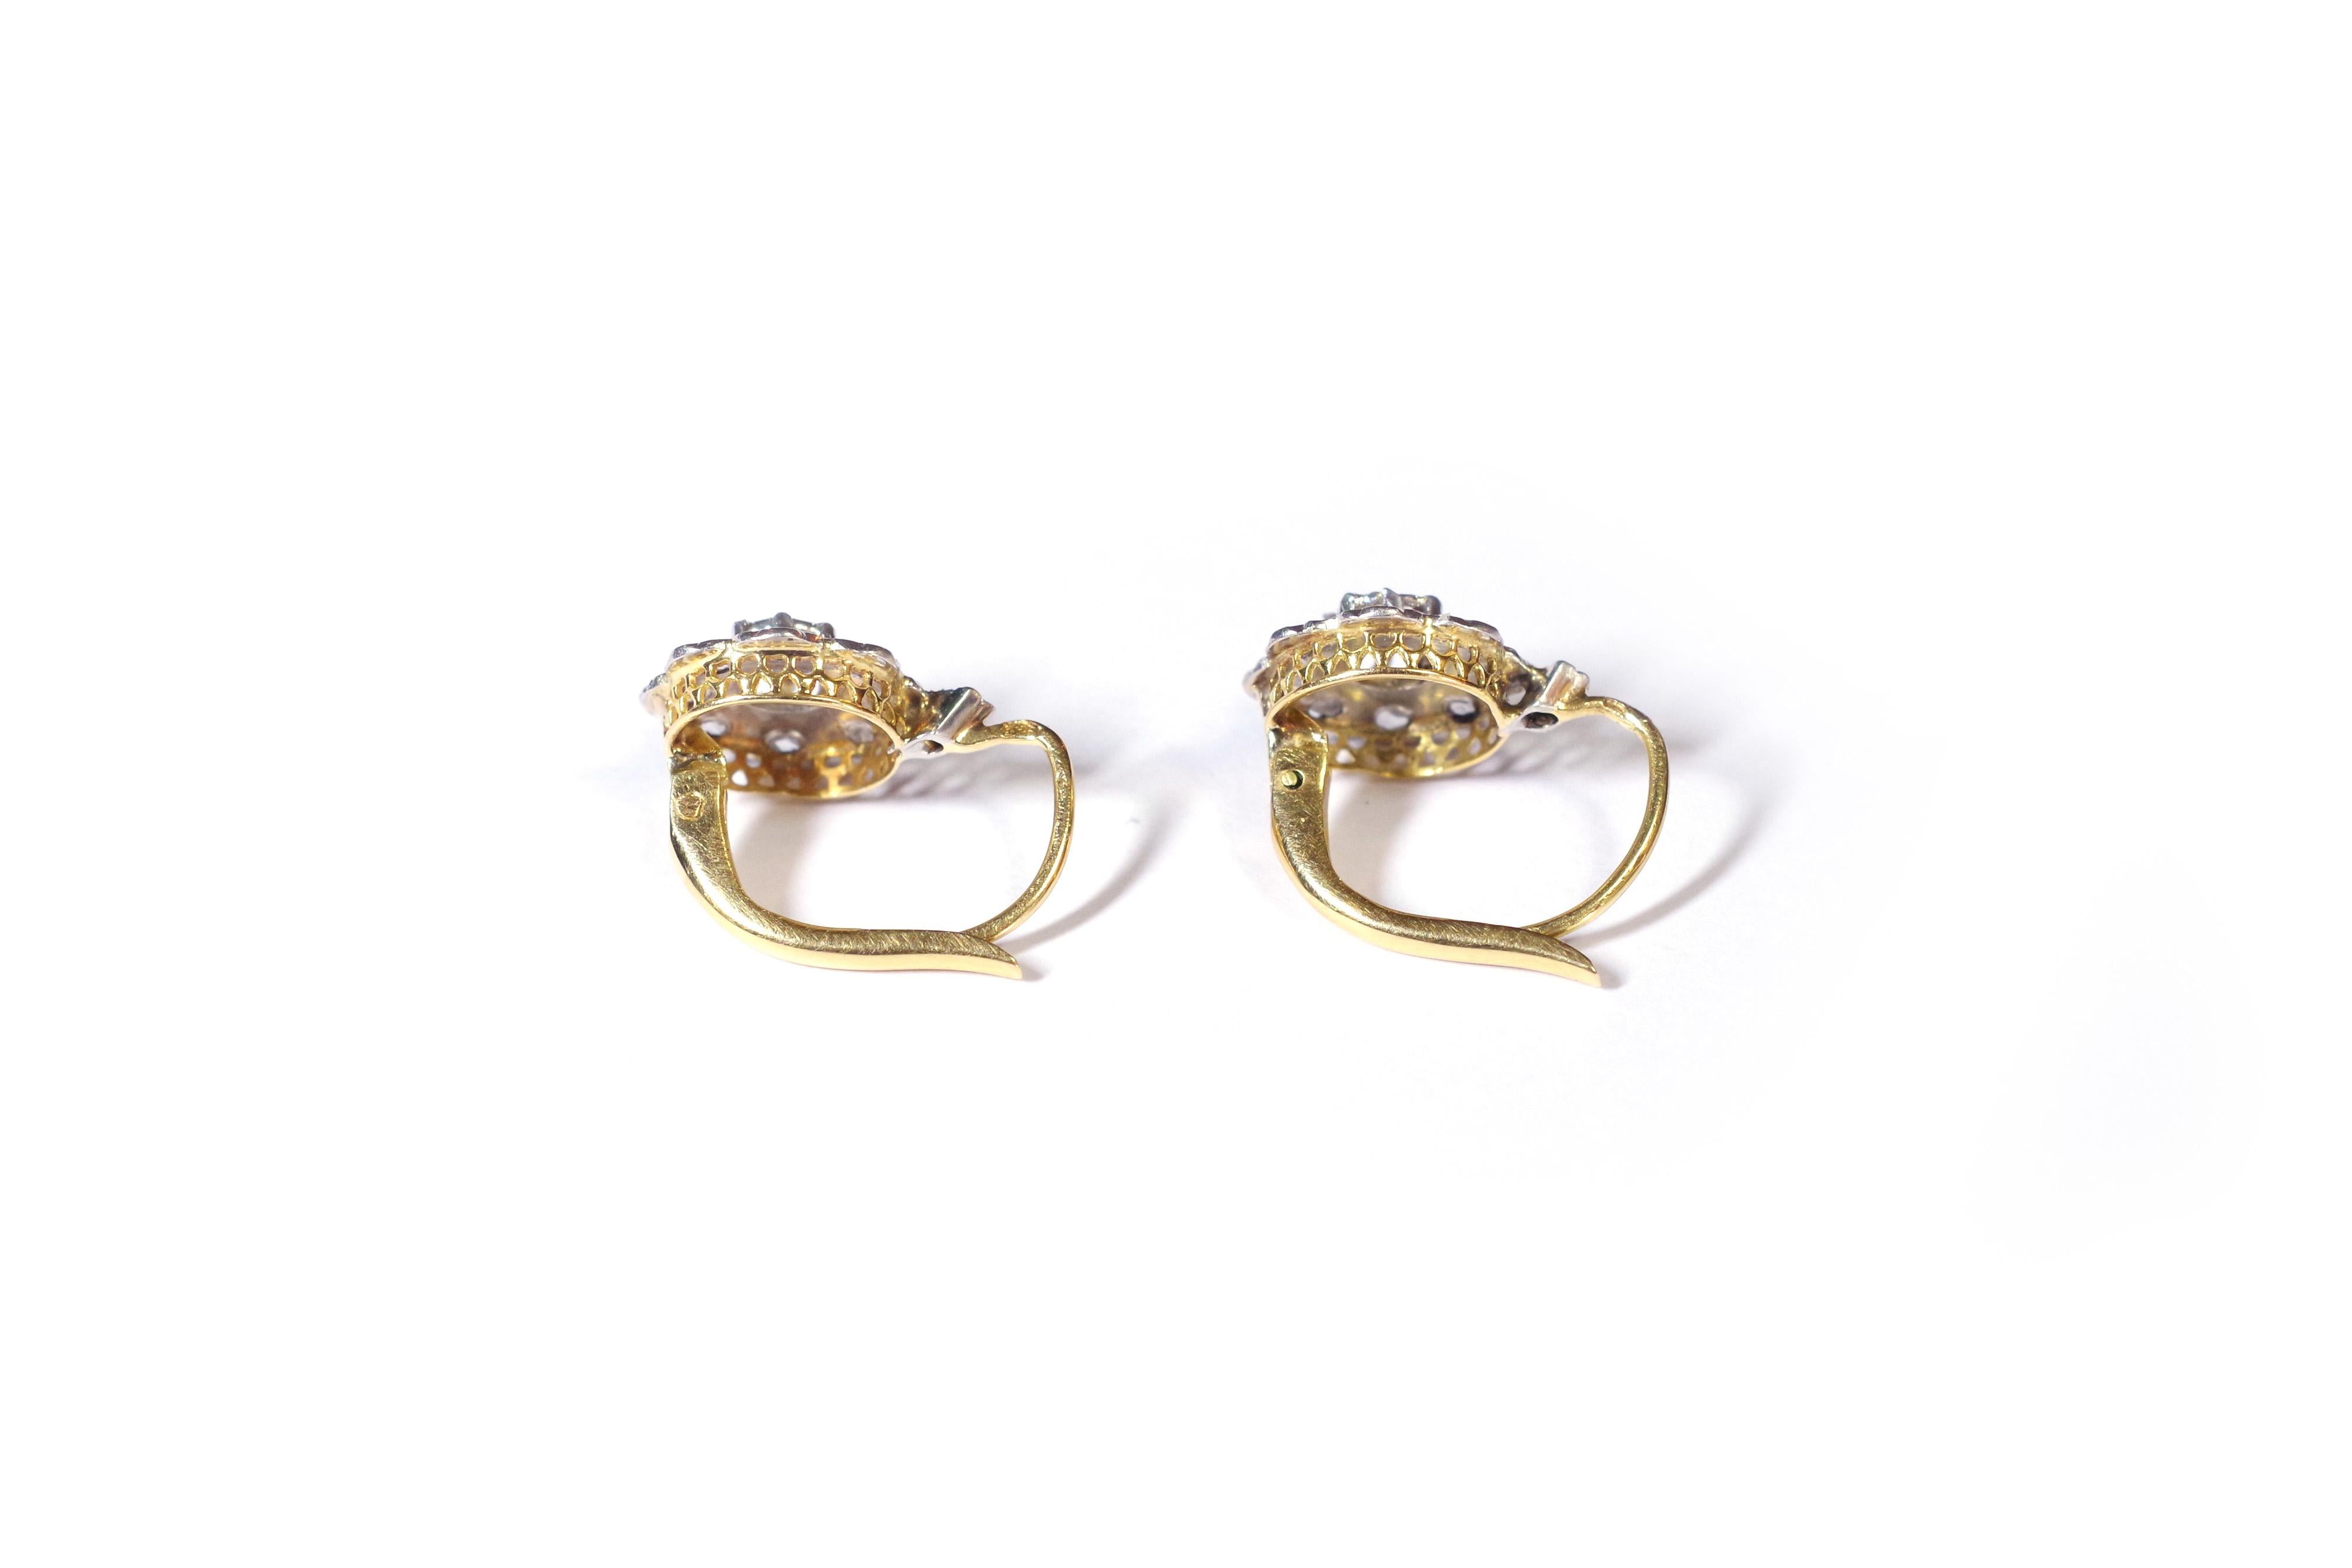 Women's Belle Epoque diamond earrings in 18 karat yellow gold and platinum